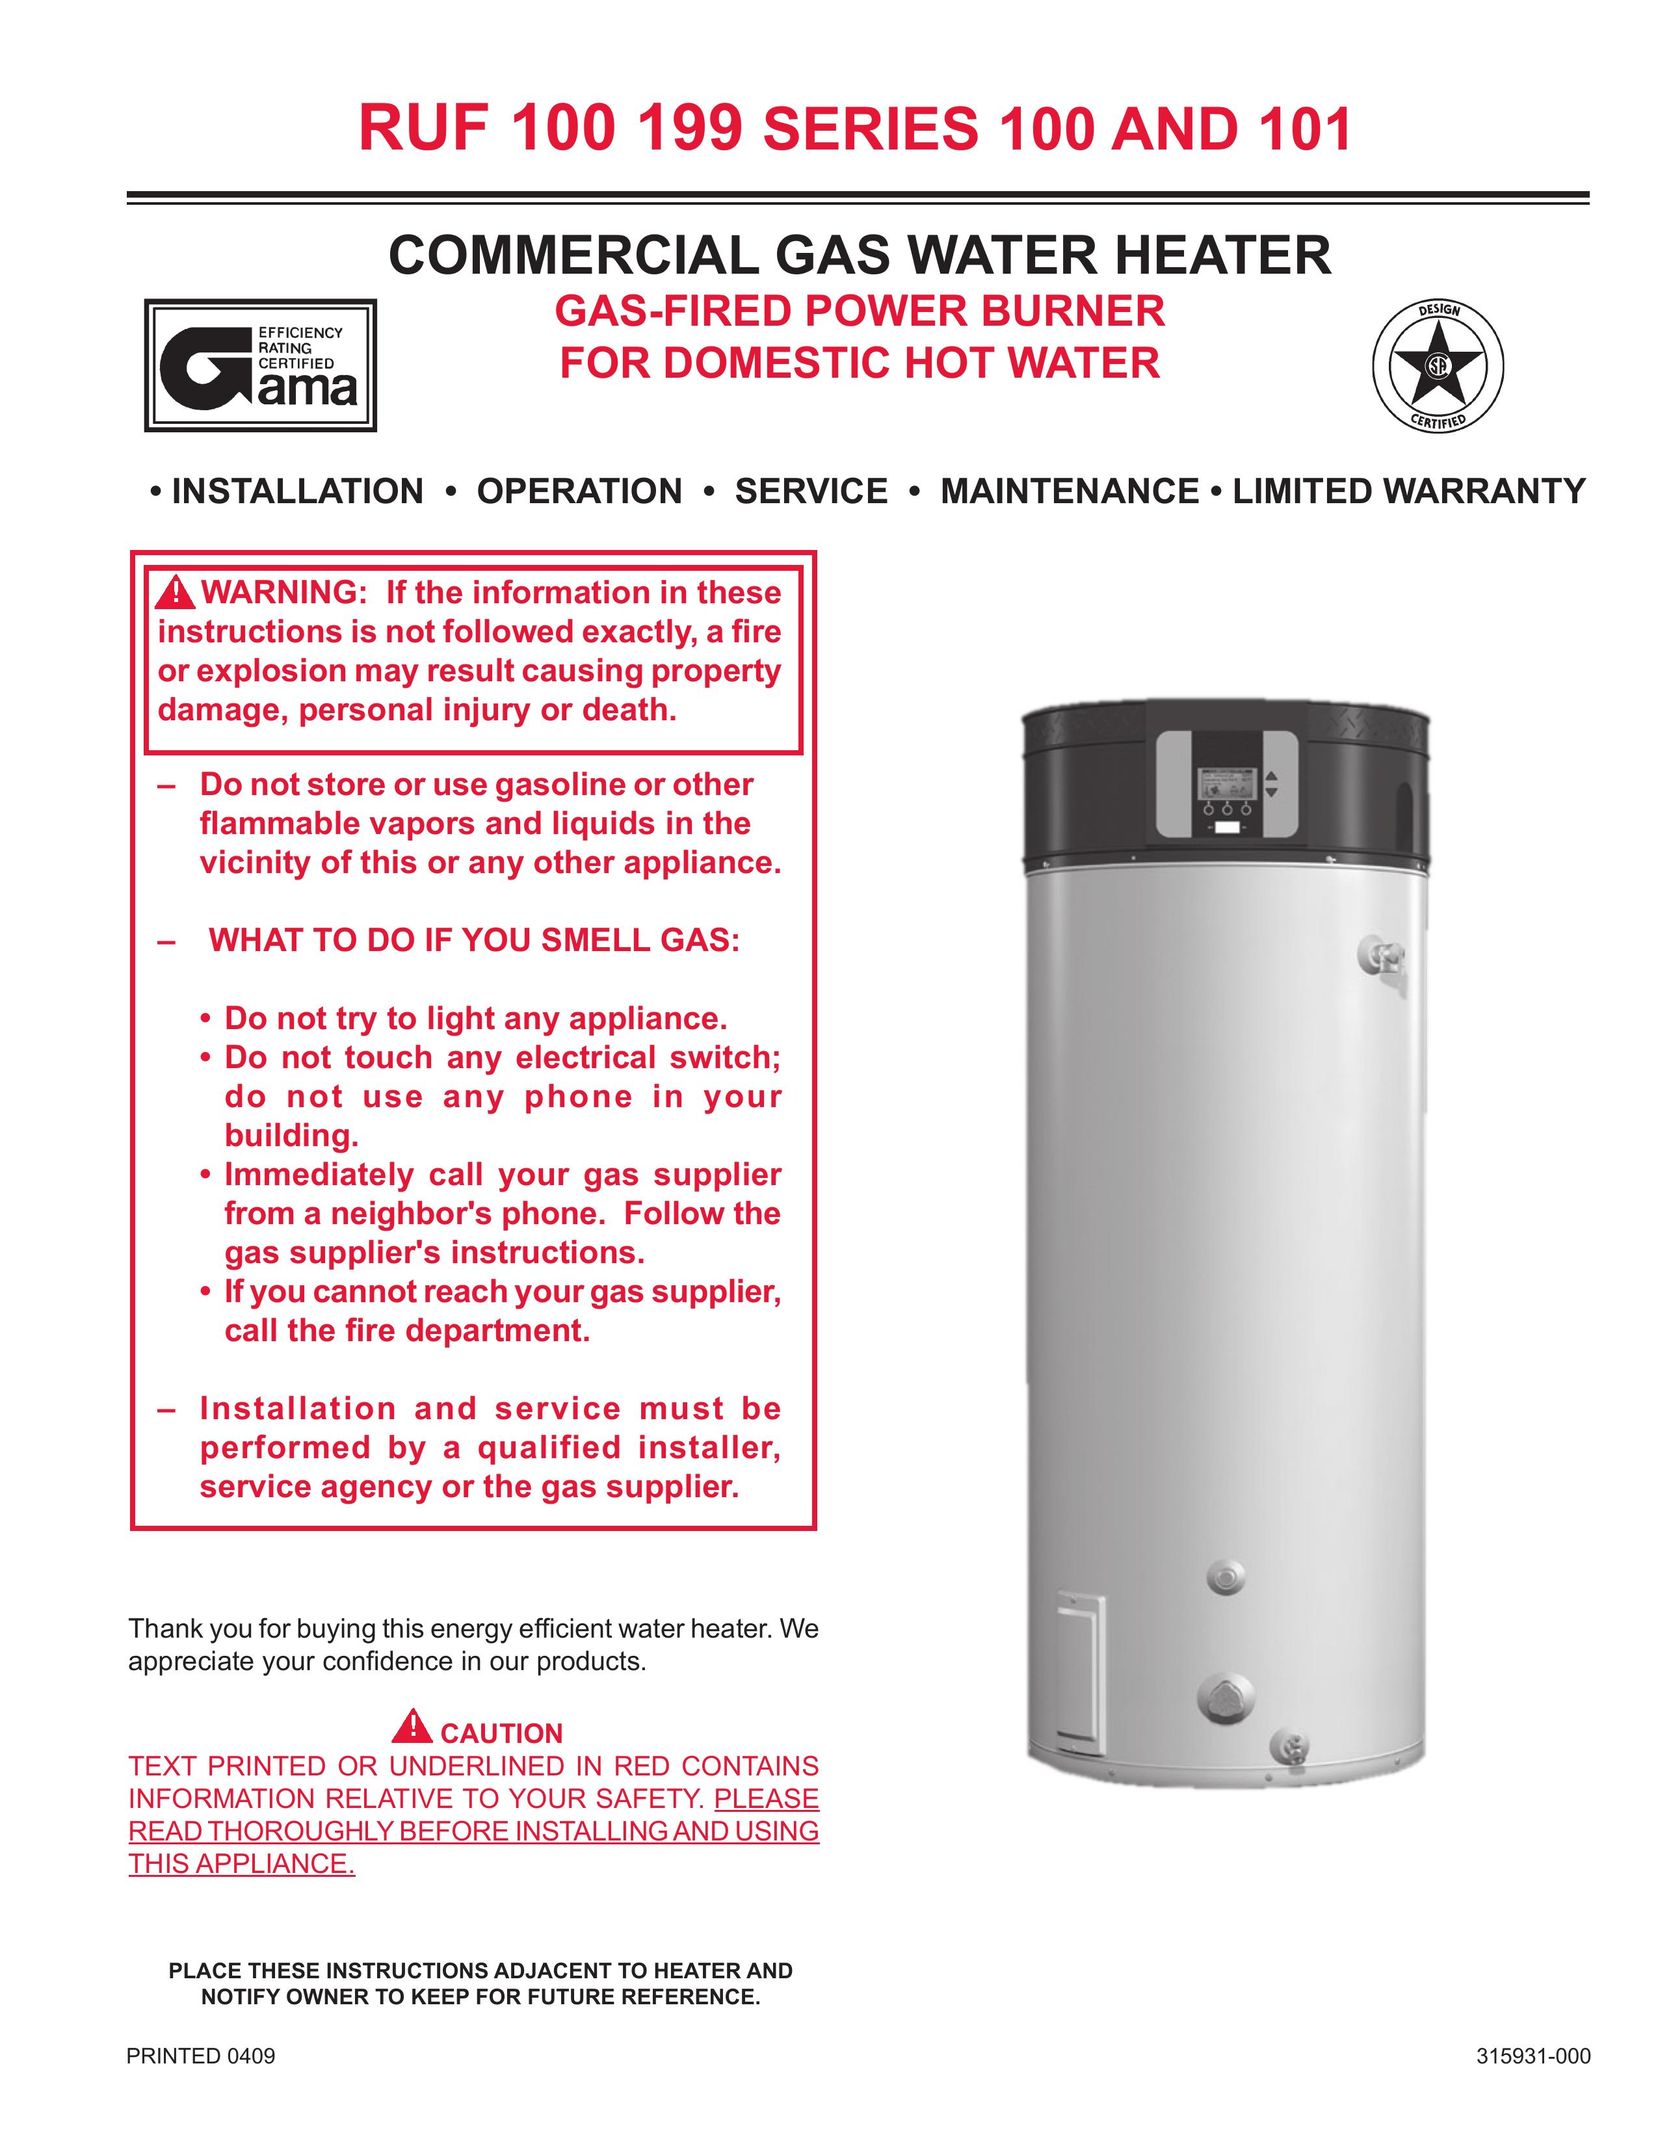 Reliance Water Heaters RUF 100 199 SERIES 100 Water Heater User Manual